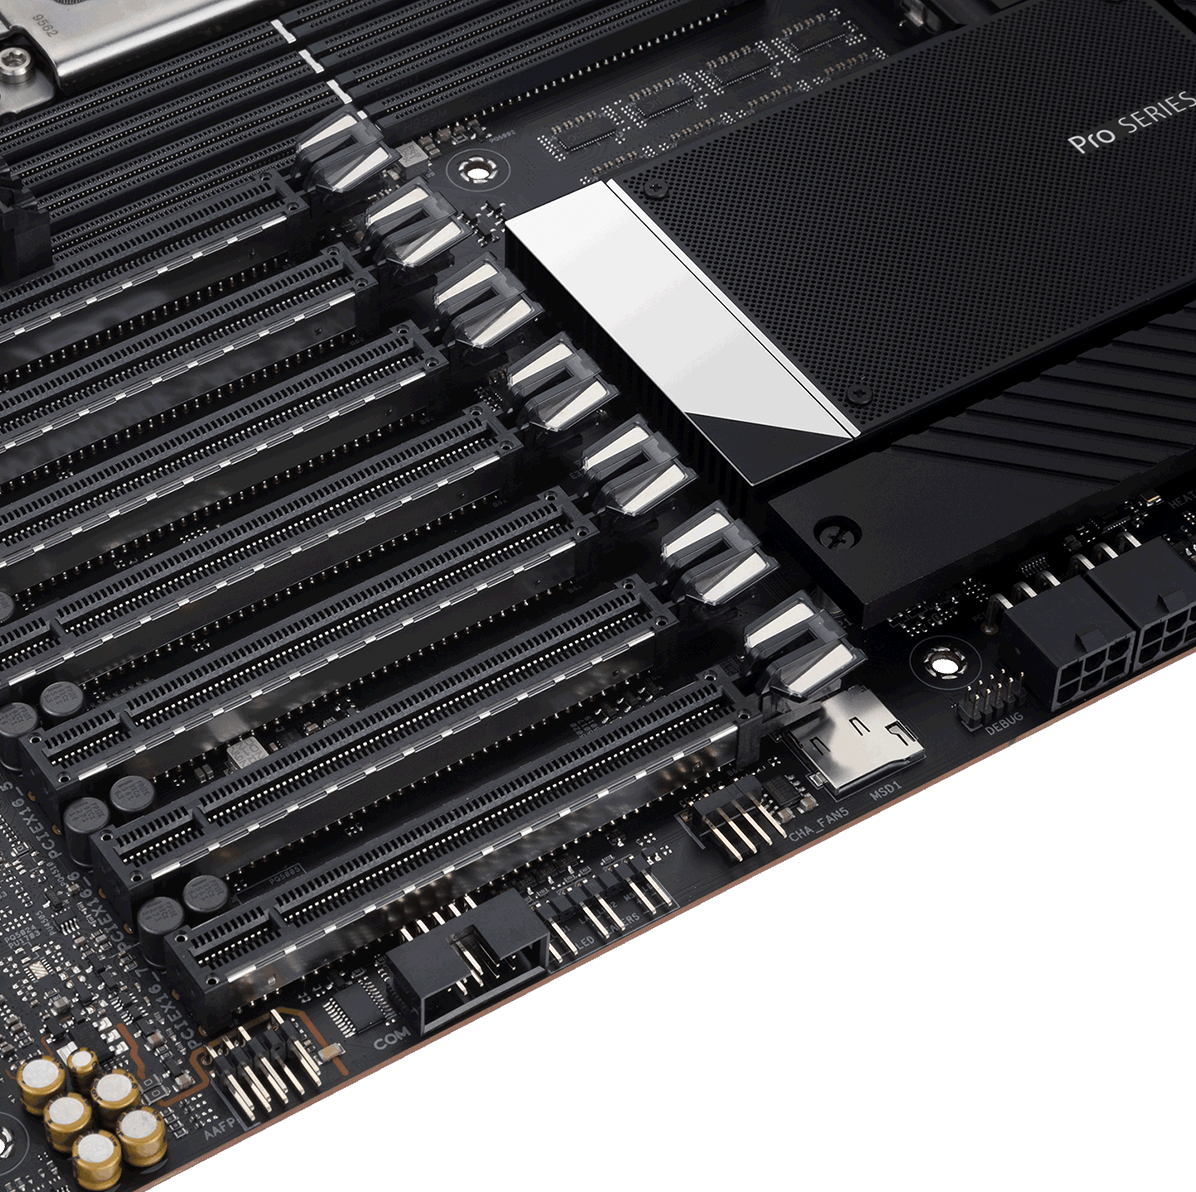 Multi-GPU layout on motherboard design